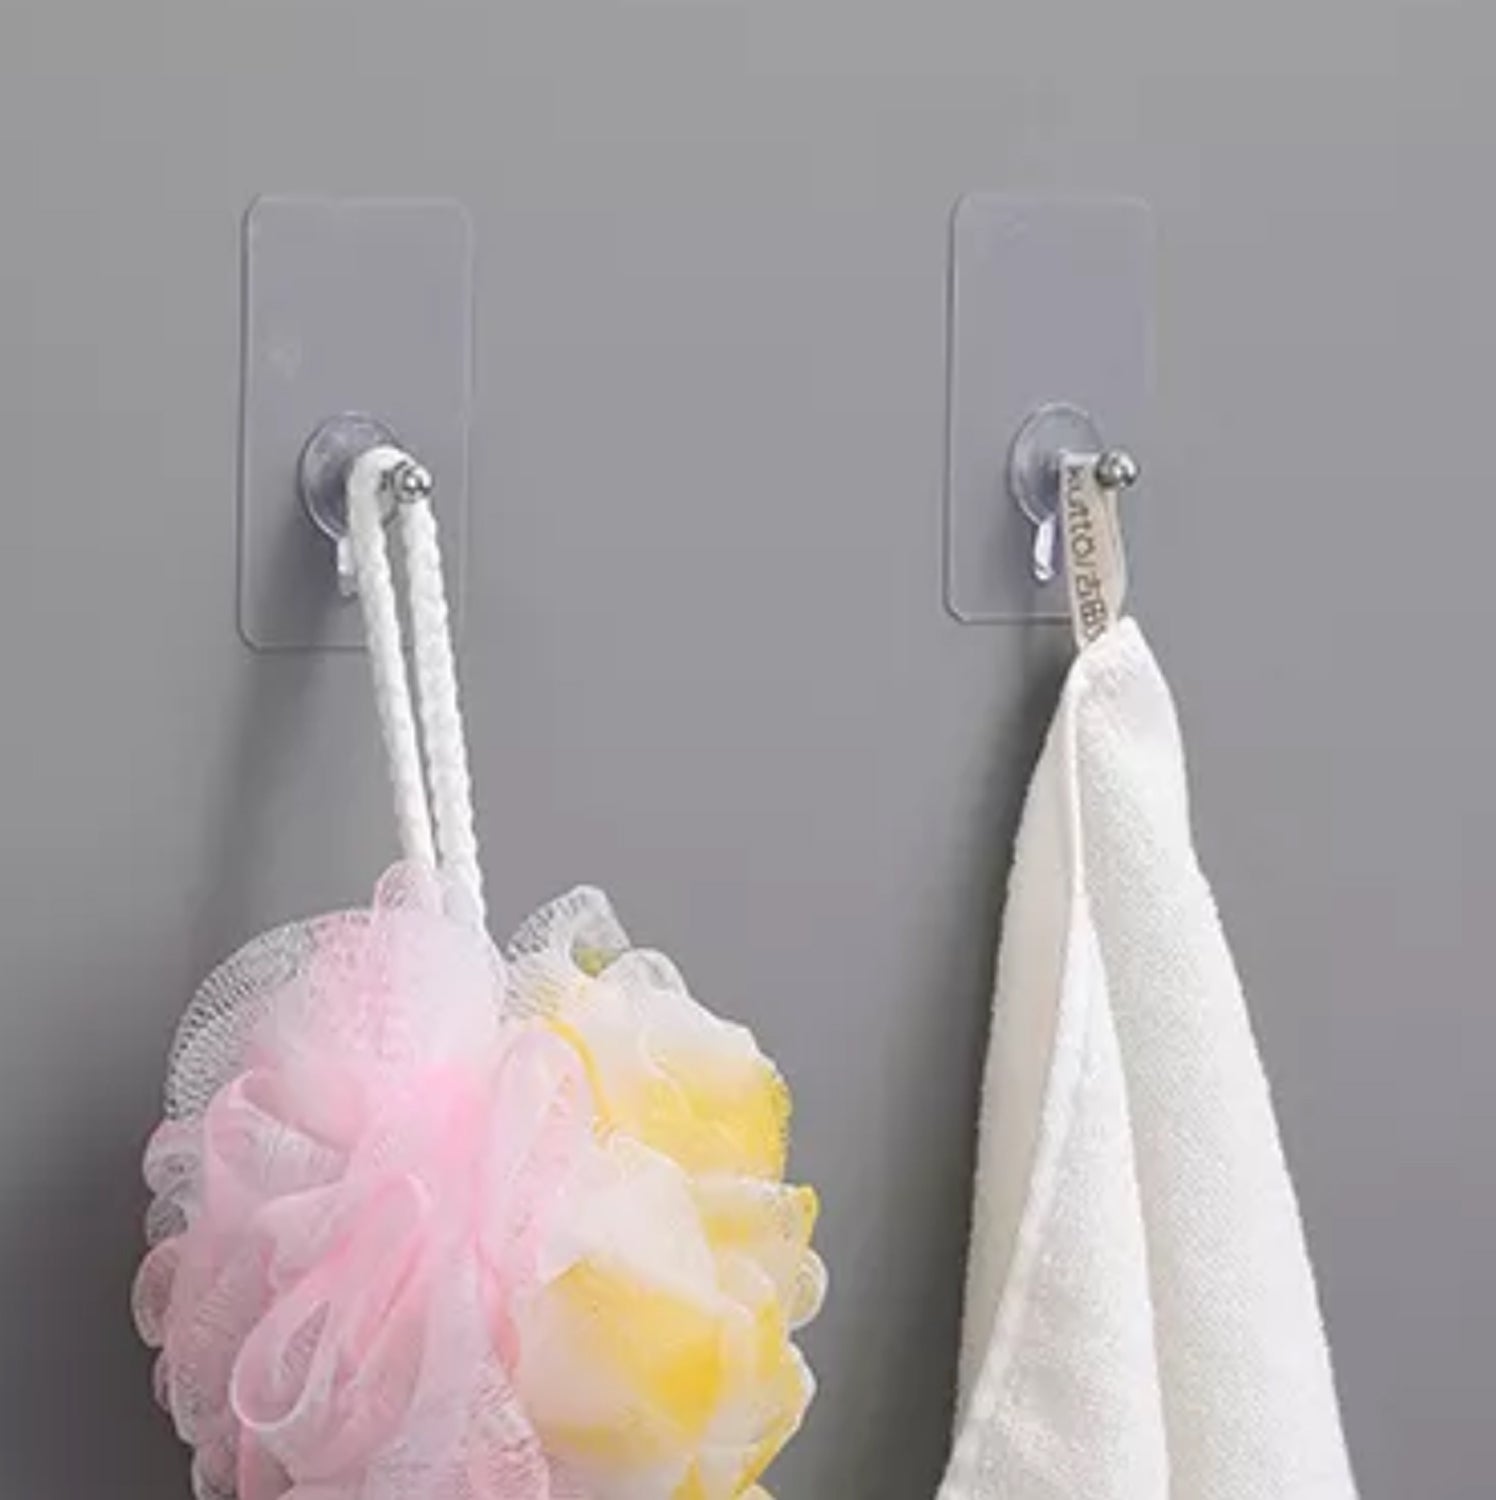 Self-Adhesive Screw Hooks to organizing kitchen & bathroom(PACK OF 20)